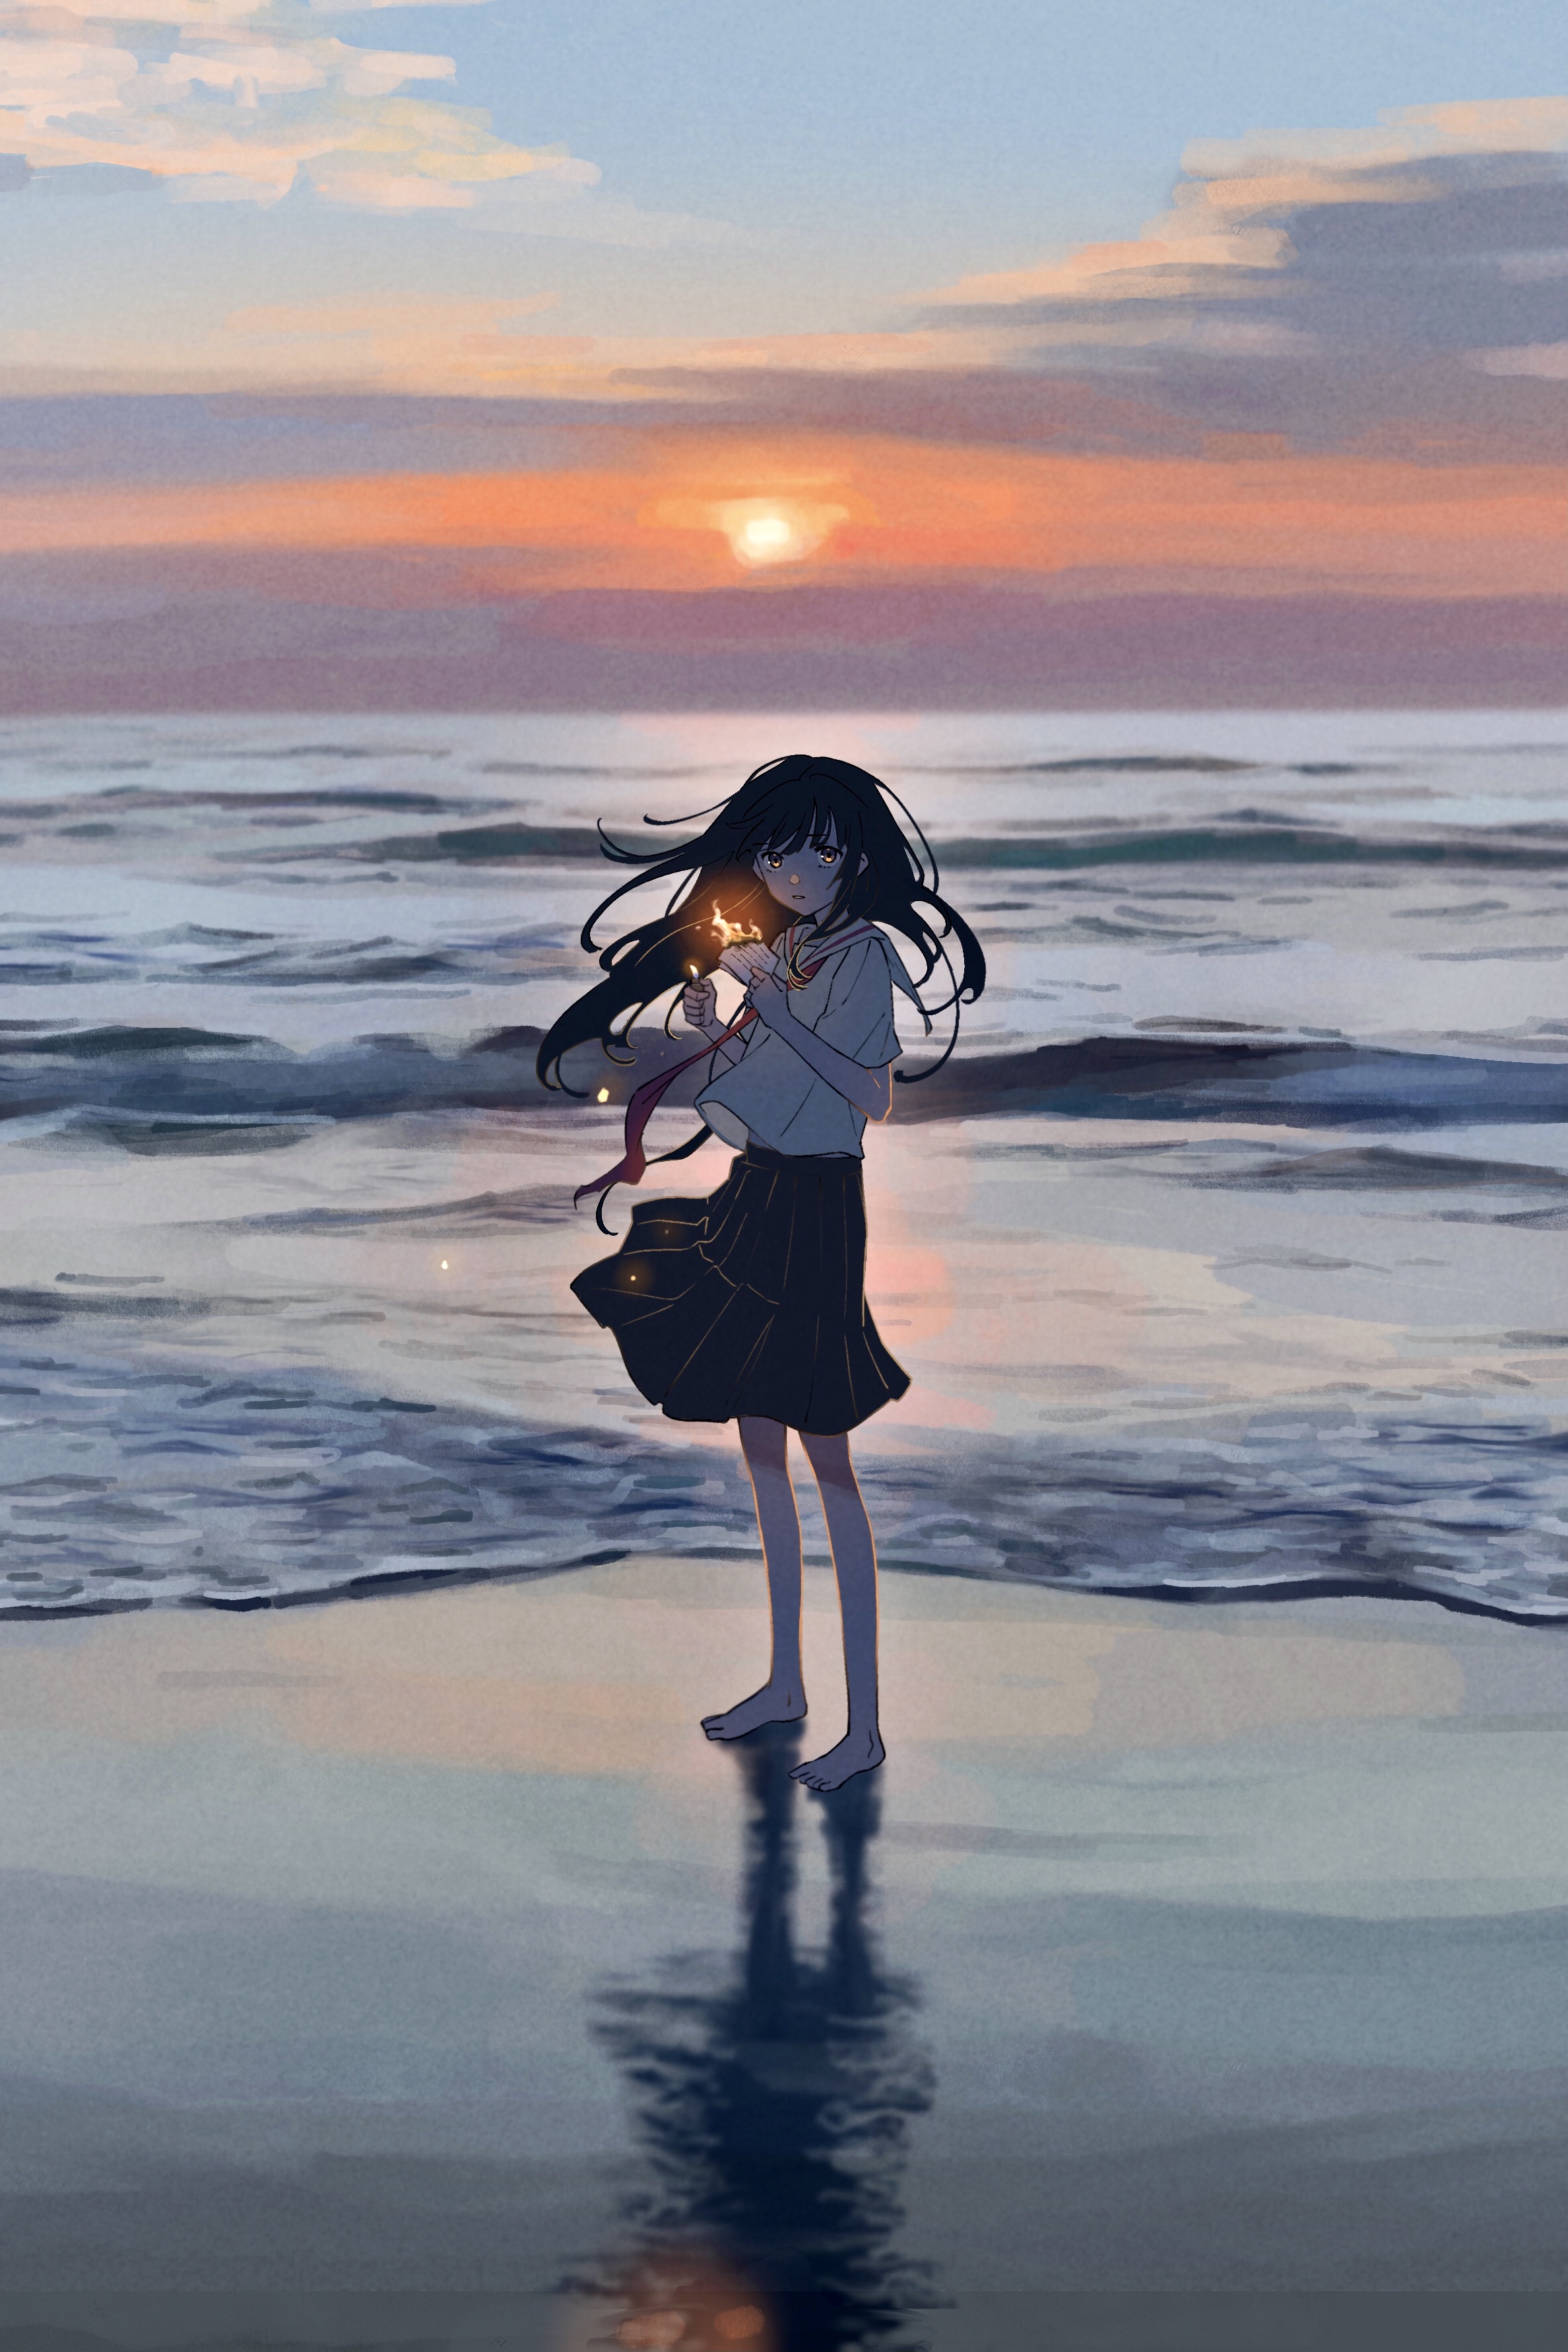 Anime 2376x3563 Mele anime anime girls artwork beach sunset school uniform barefoot